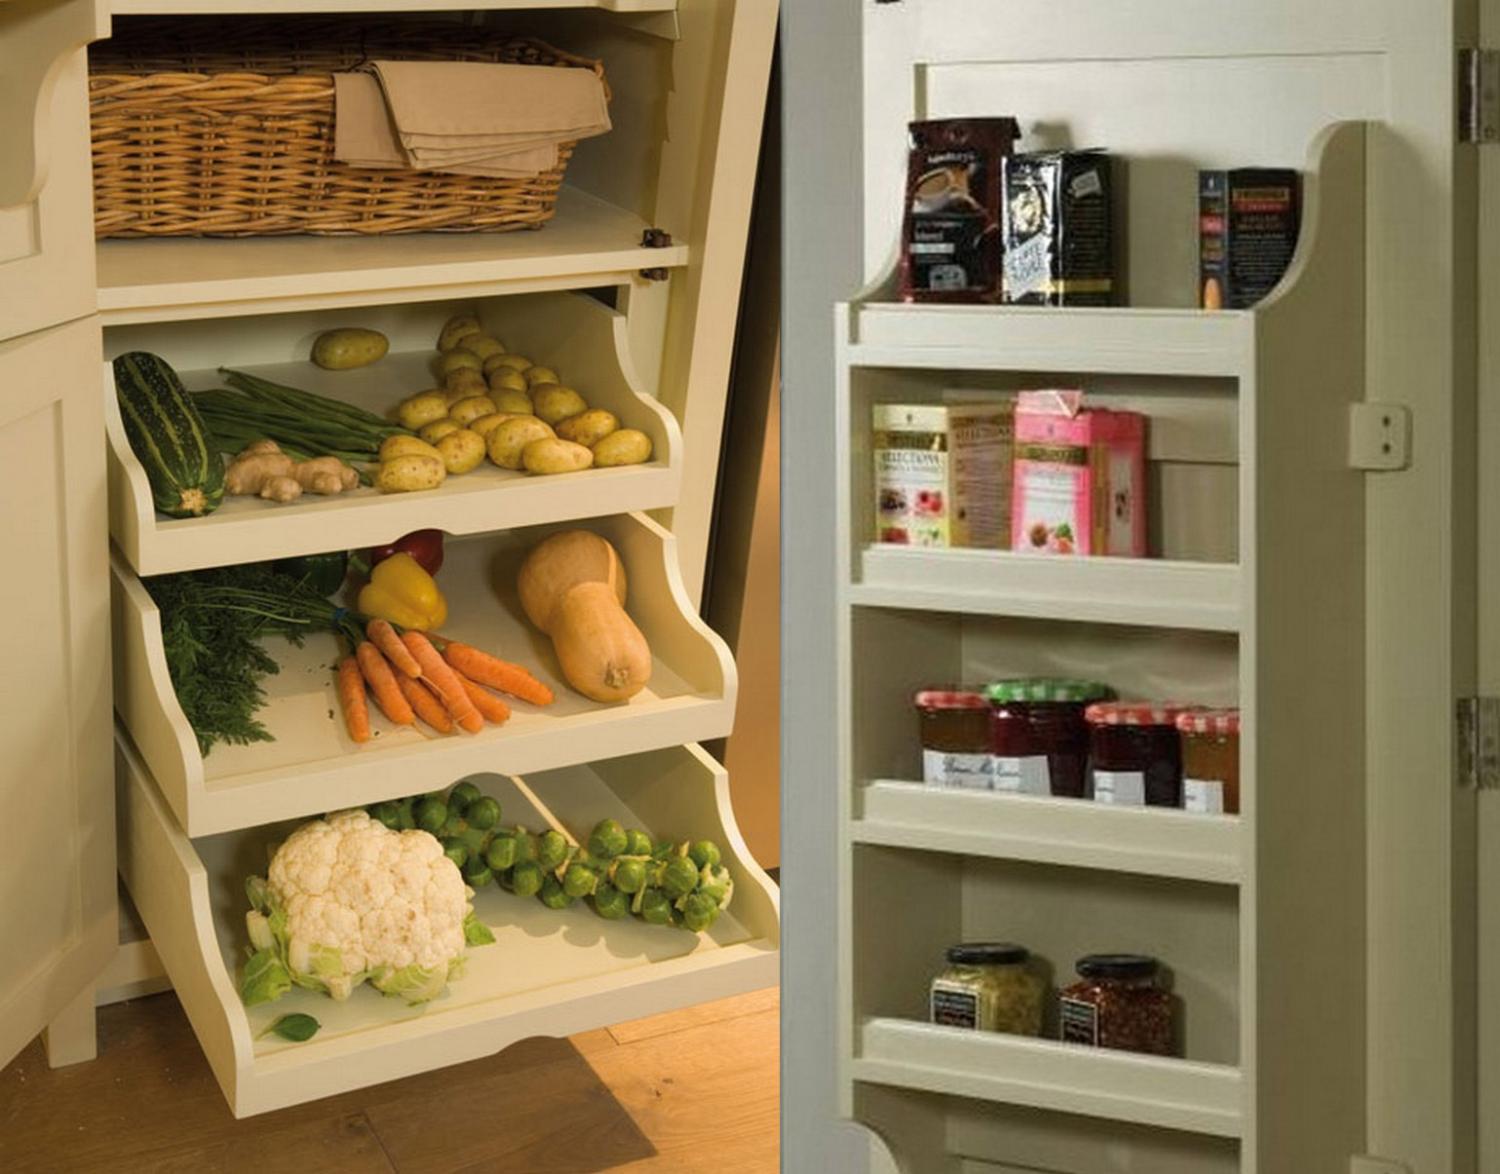 Neptune Wrap-Around Refrigerator Pantry Is The Ultimate Kitchen Storage Solution - Neptune Grand Larder Unit